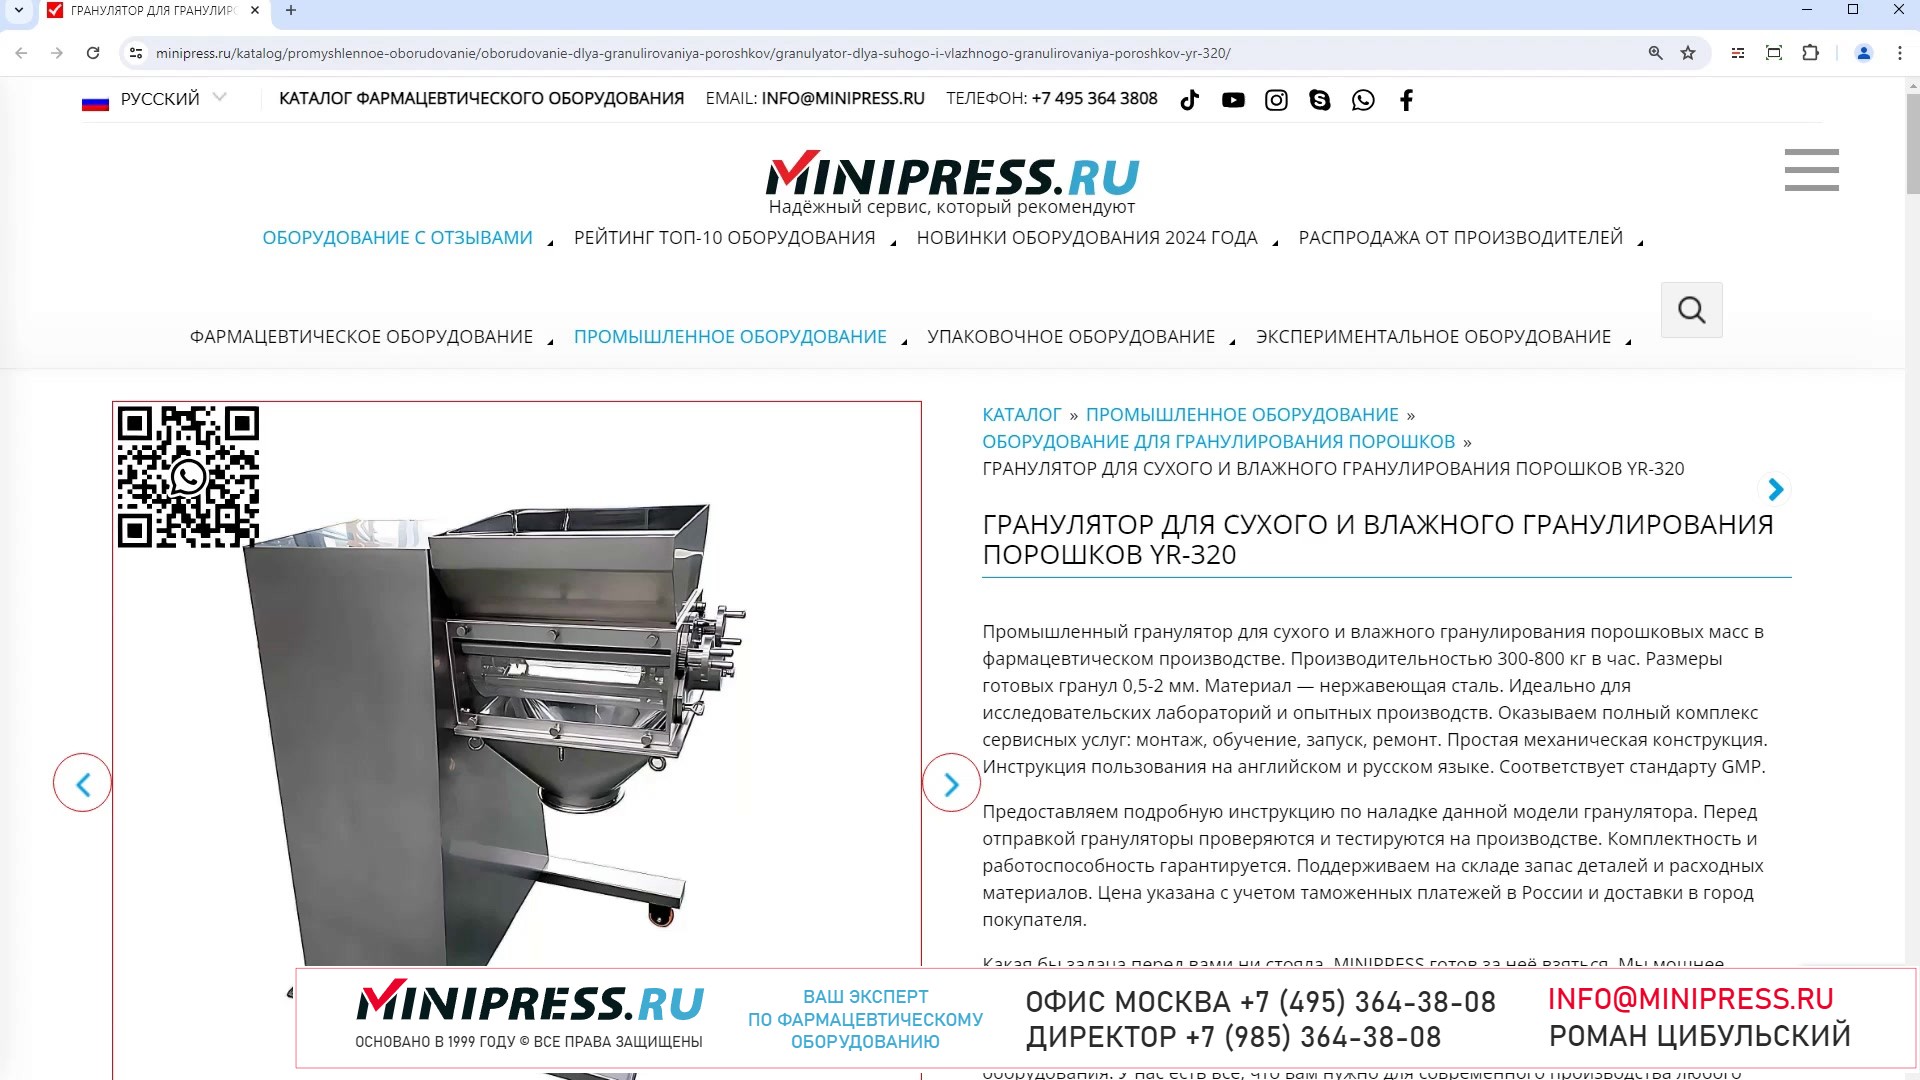 Minipress.ru Гранулятор для сухого и влажного гранулирования порошков YR-320